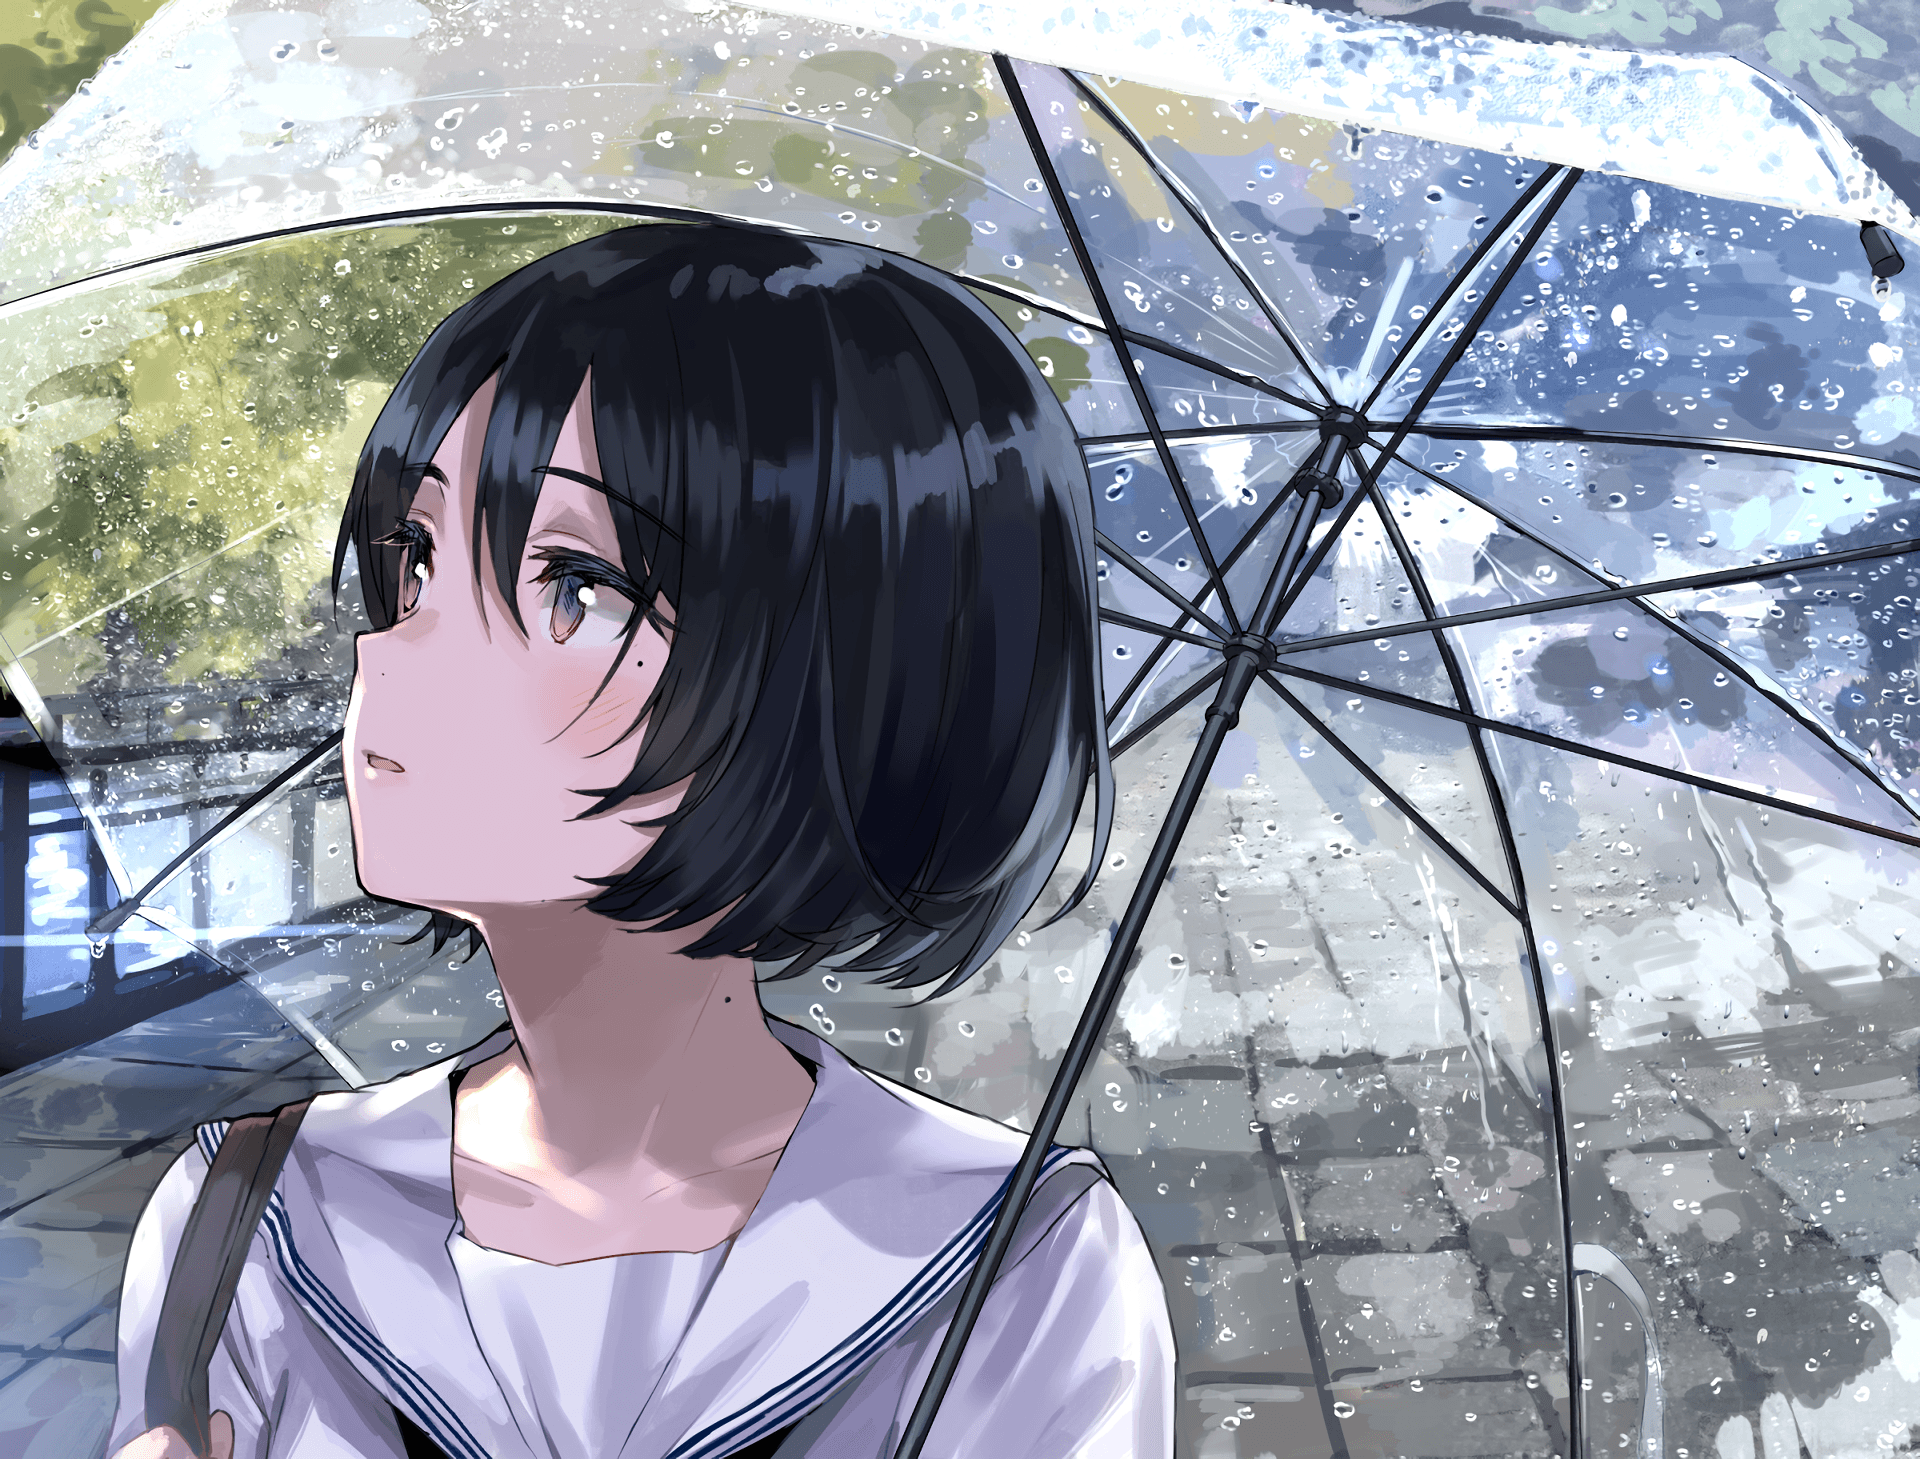 Cute Anime Girl With Umbrella gambar ke 4